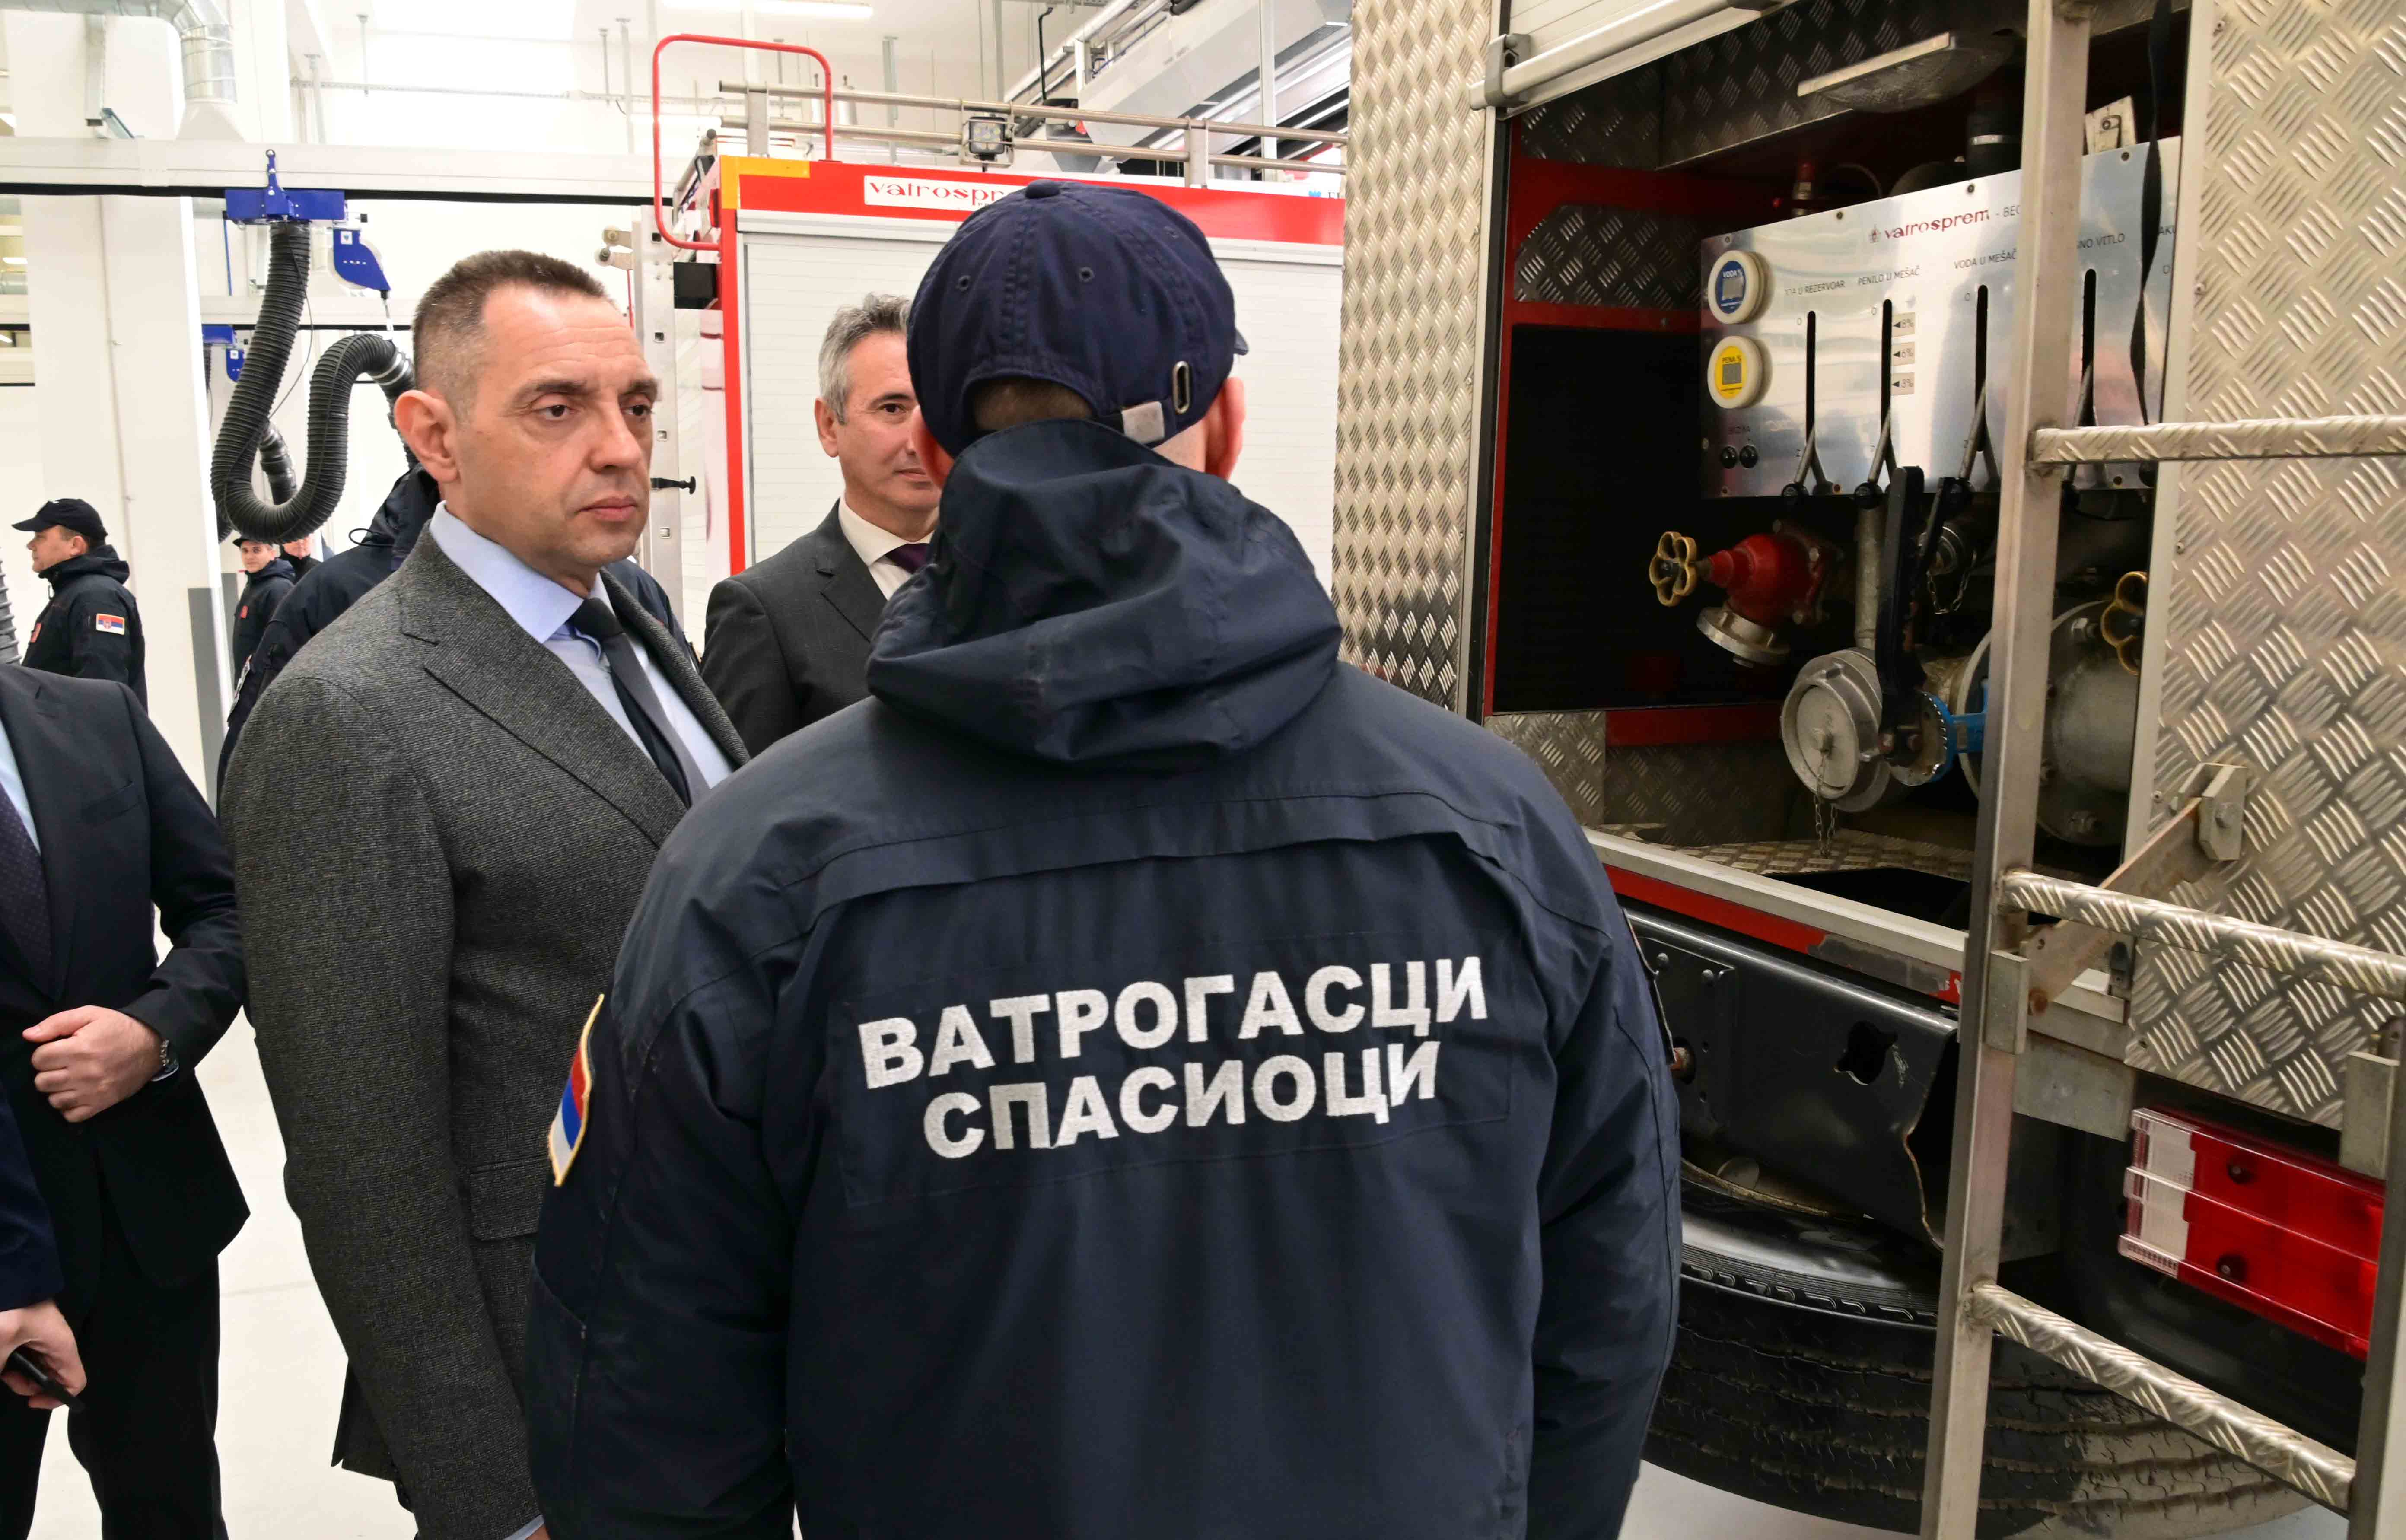 Ministar Aleksandar Vulin: Srbija, na čelu sa predsednikom Vučićem, ceni rad svih pripadnika MUP-a, a posebno naših vatrogasaca